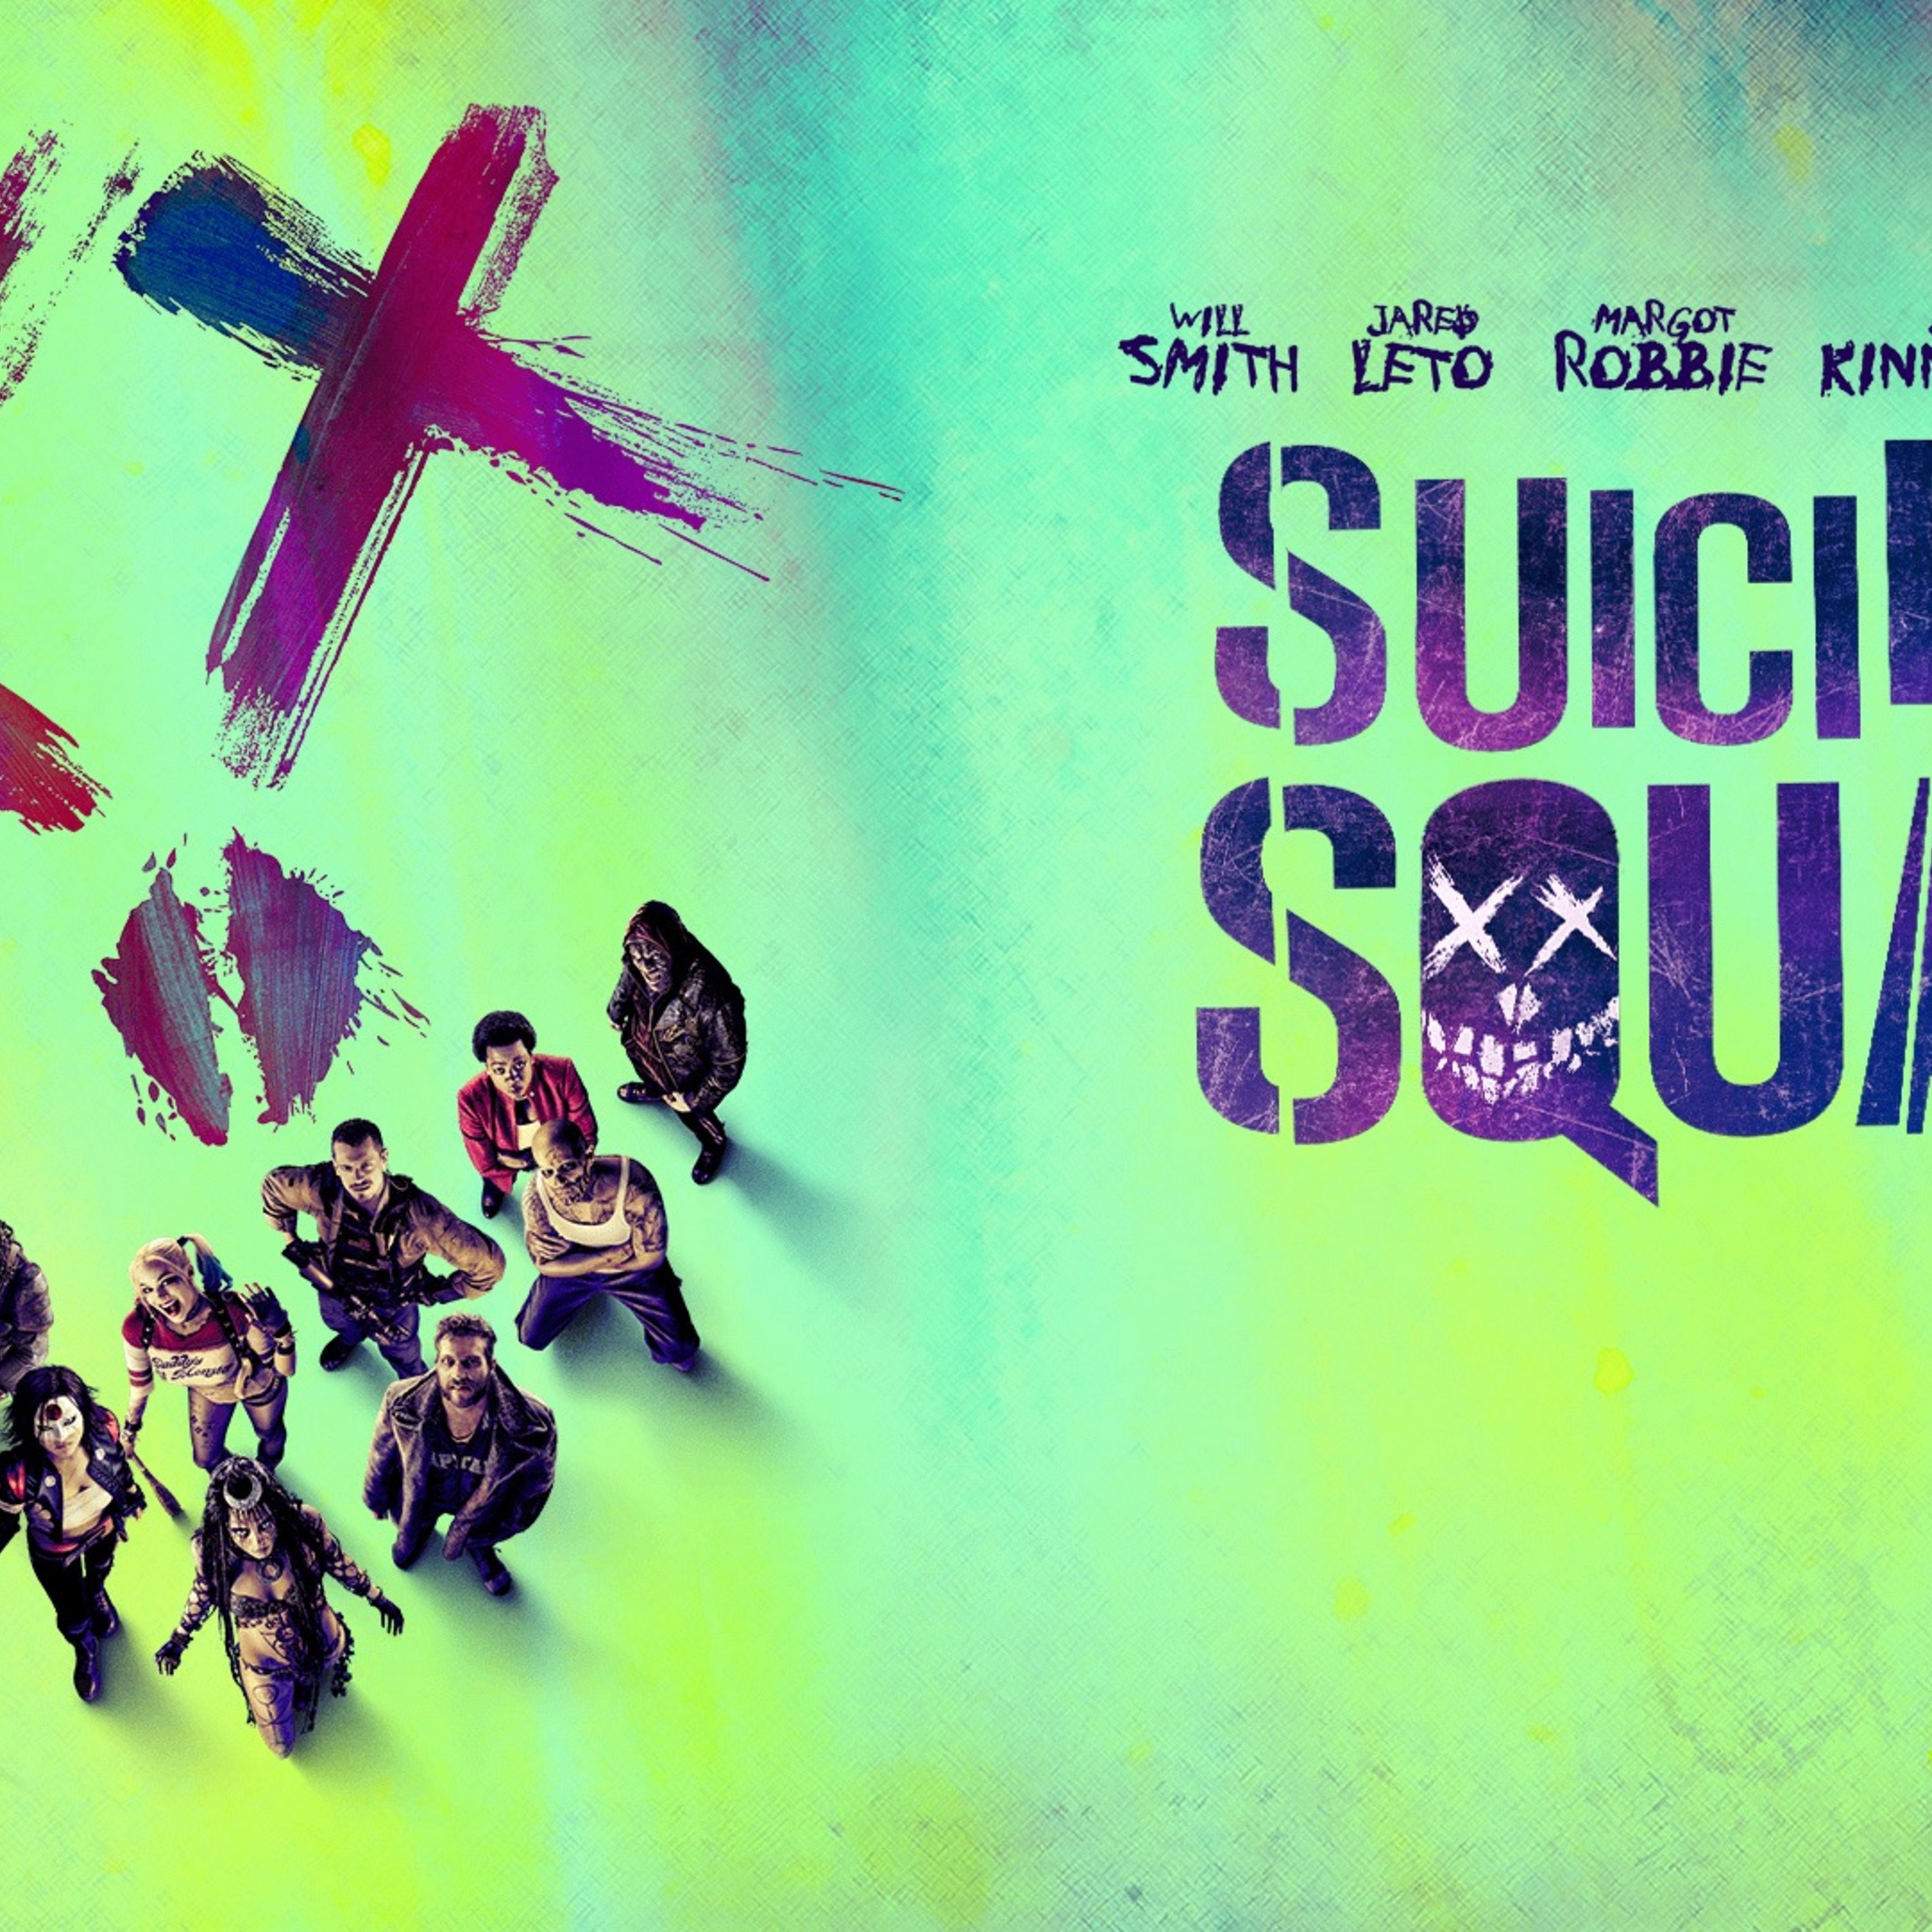 Suicide squad ops. Gangsta Kehlani отряд самоубийц. Suicide Squad: Special ops. Suicide Squad: the album. Отряд самоубийц Постер фиолетовый пустой.